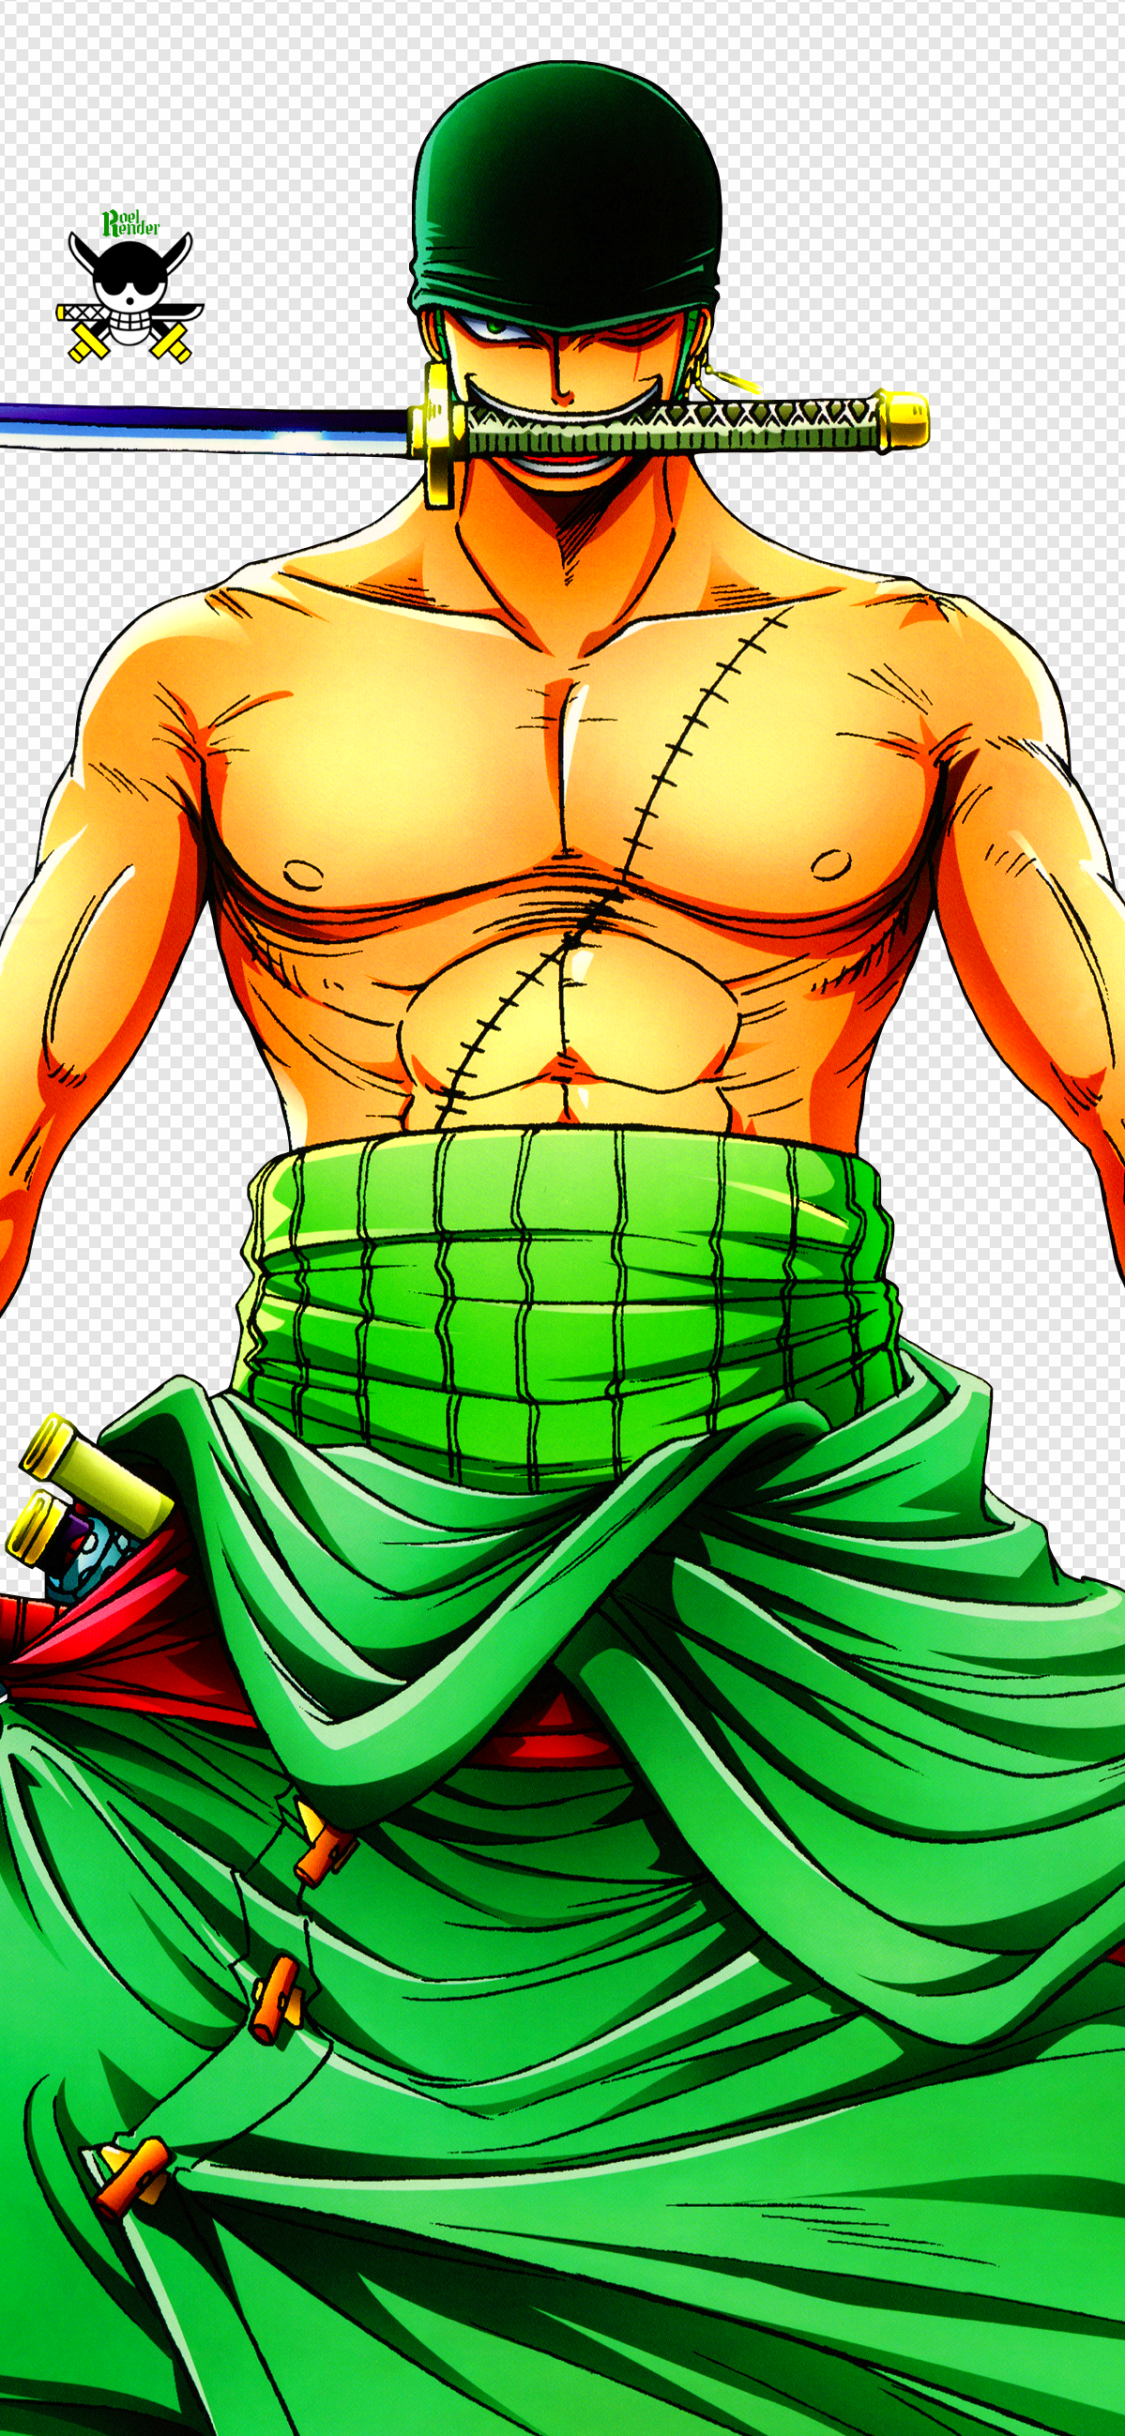 One Piece Zoro Png Image, Transparent Png , Transparent Png Image